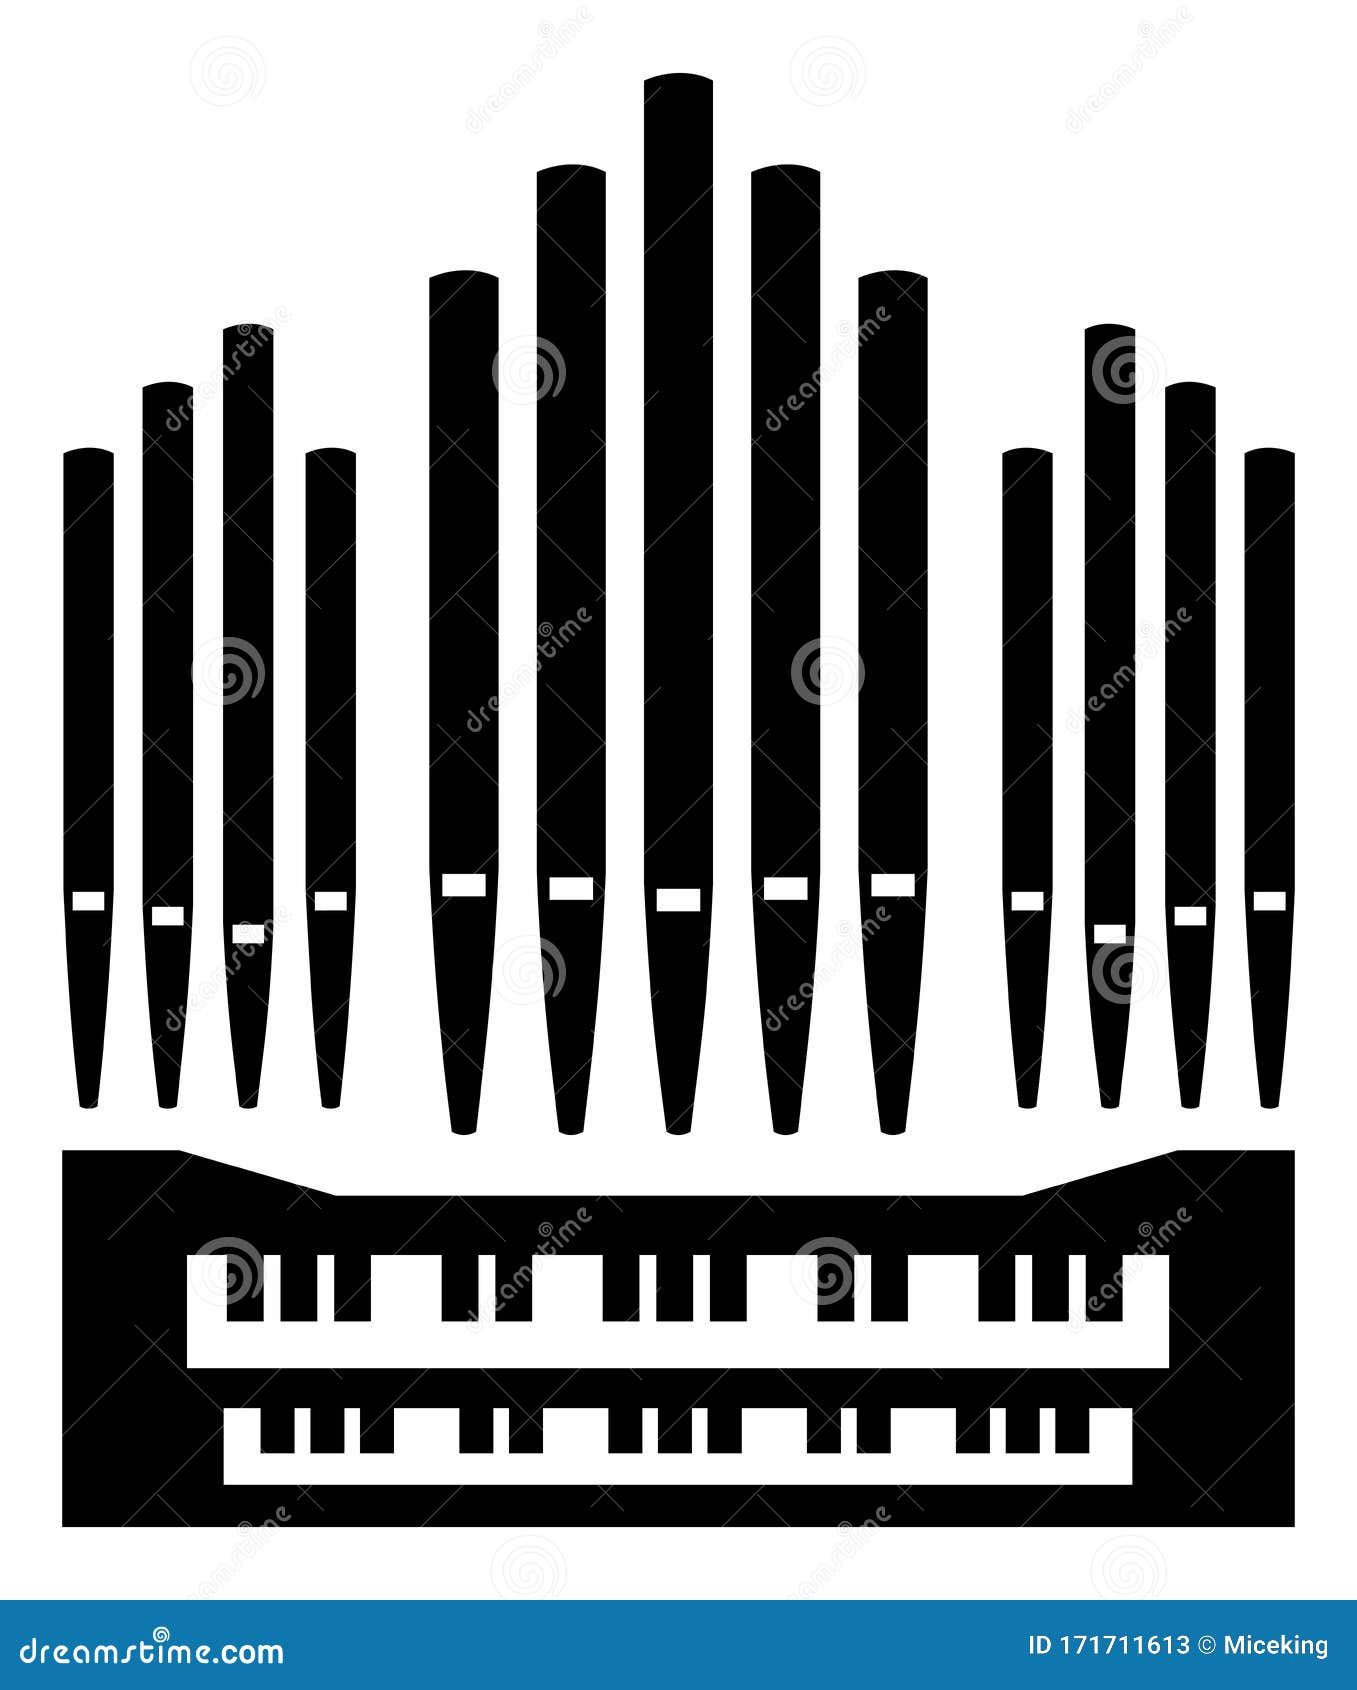 pipe organ instrument icon